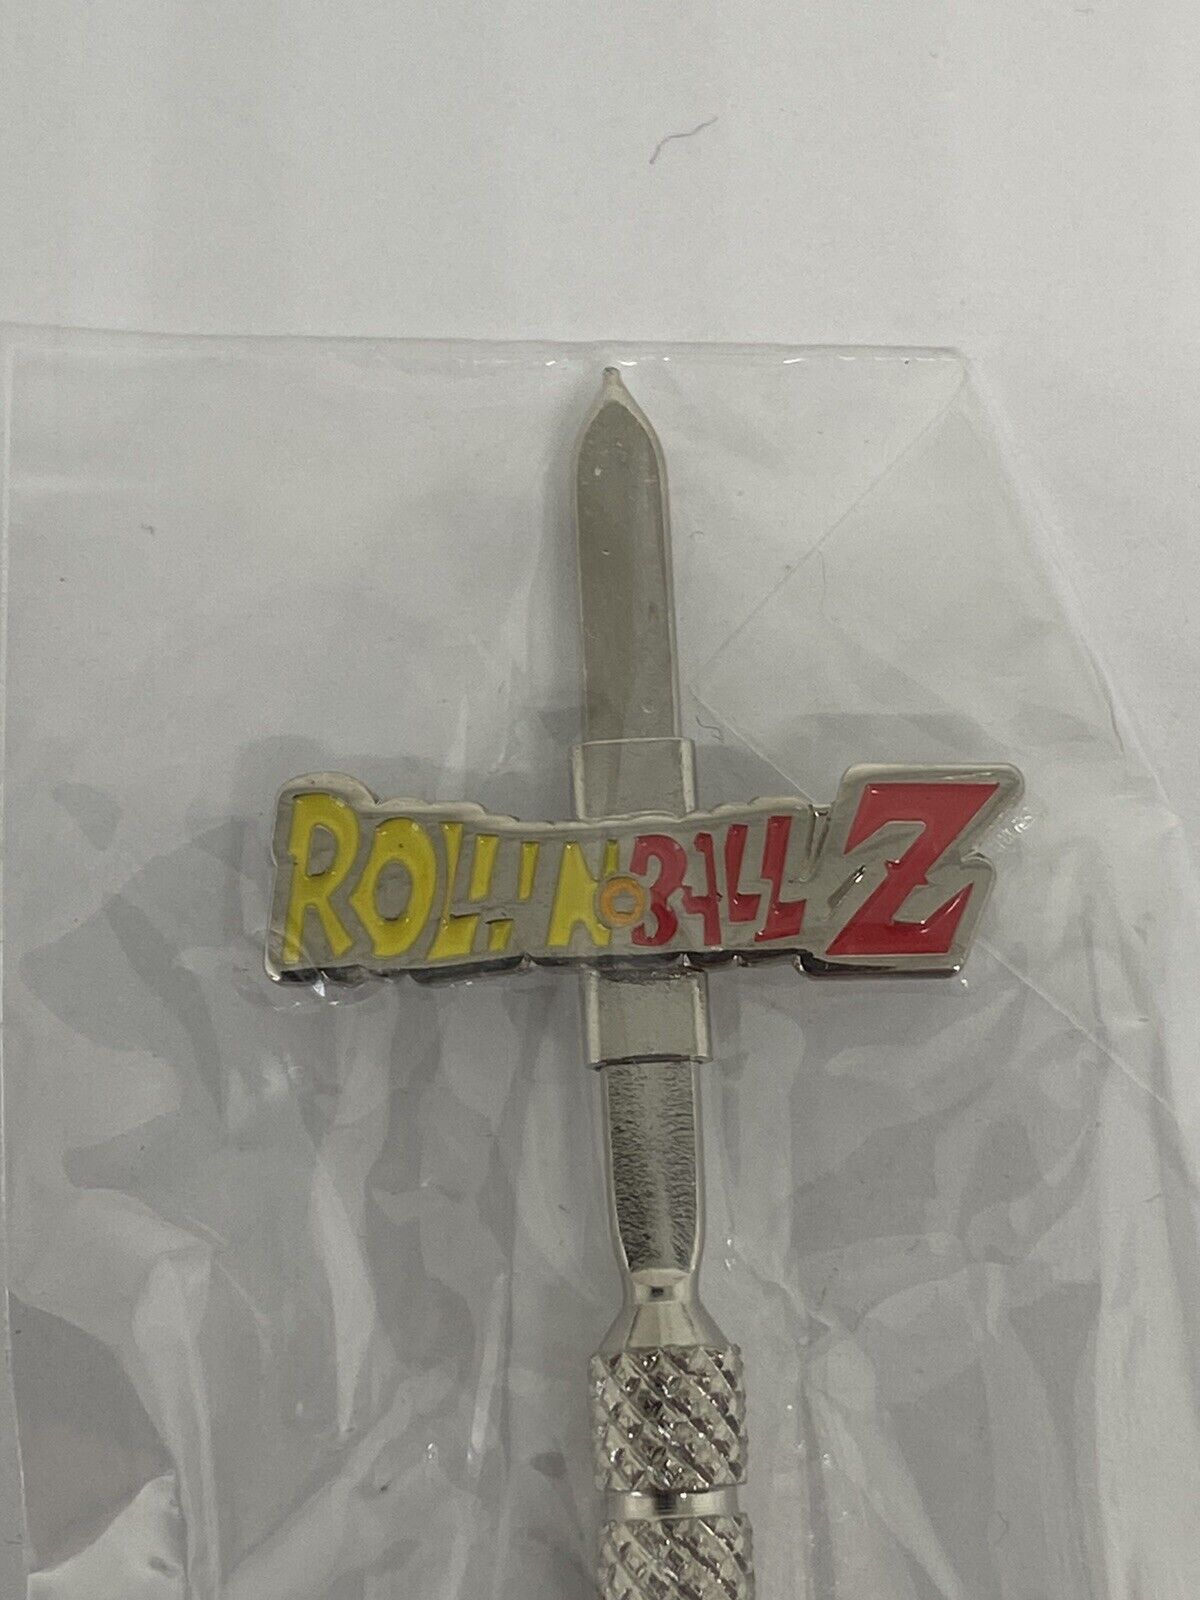 Dragon Ball Z Metal Scooping Tool - Rollin Ball Z - 4.75”